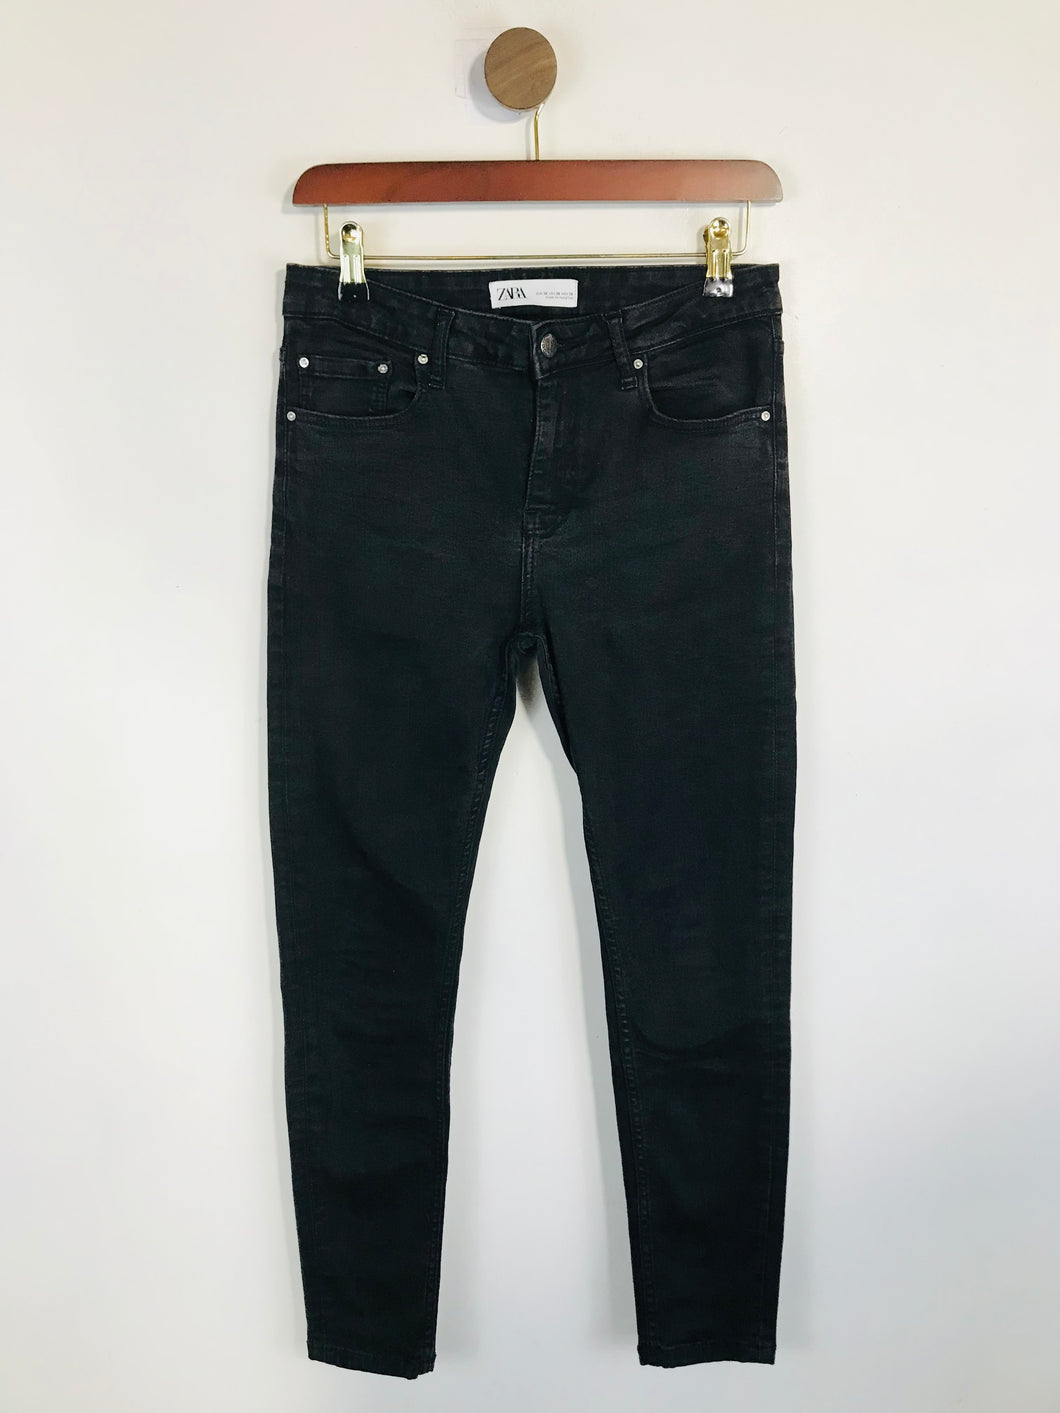 Zara Women's Skinny Jeans | EU38 UK10 | Black